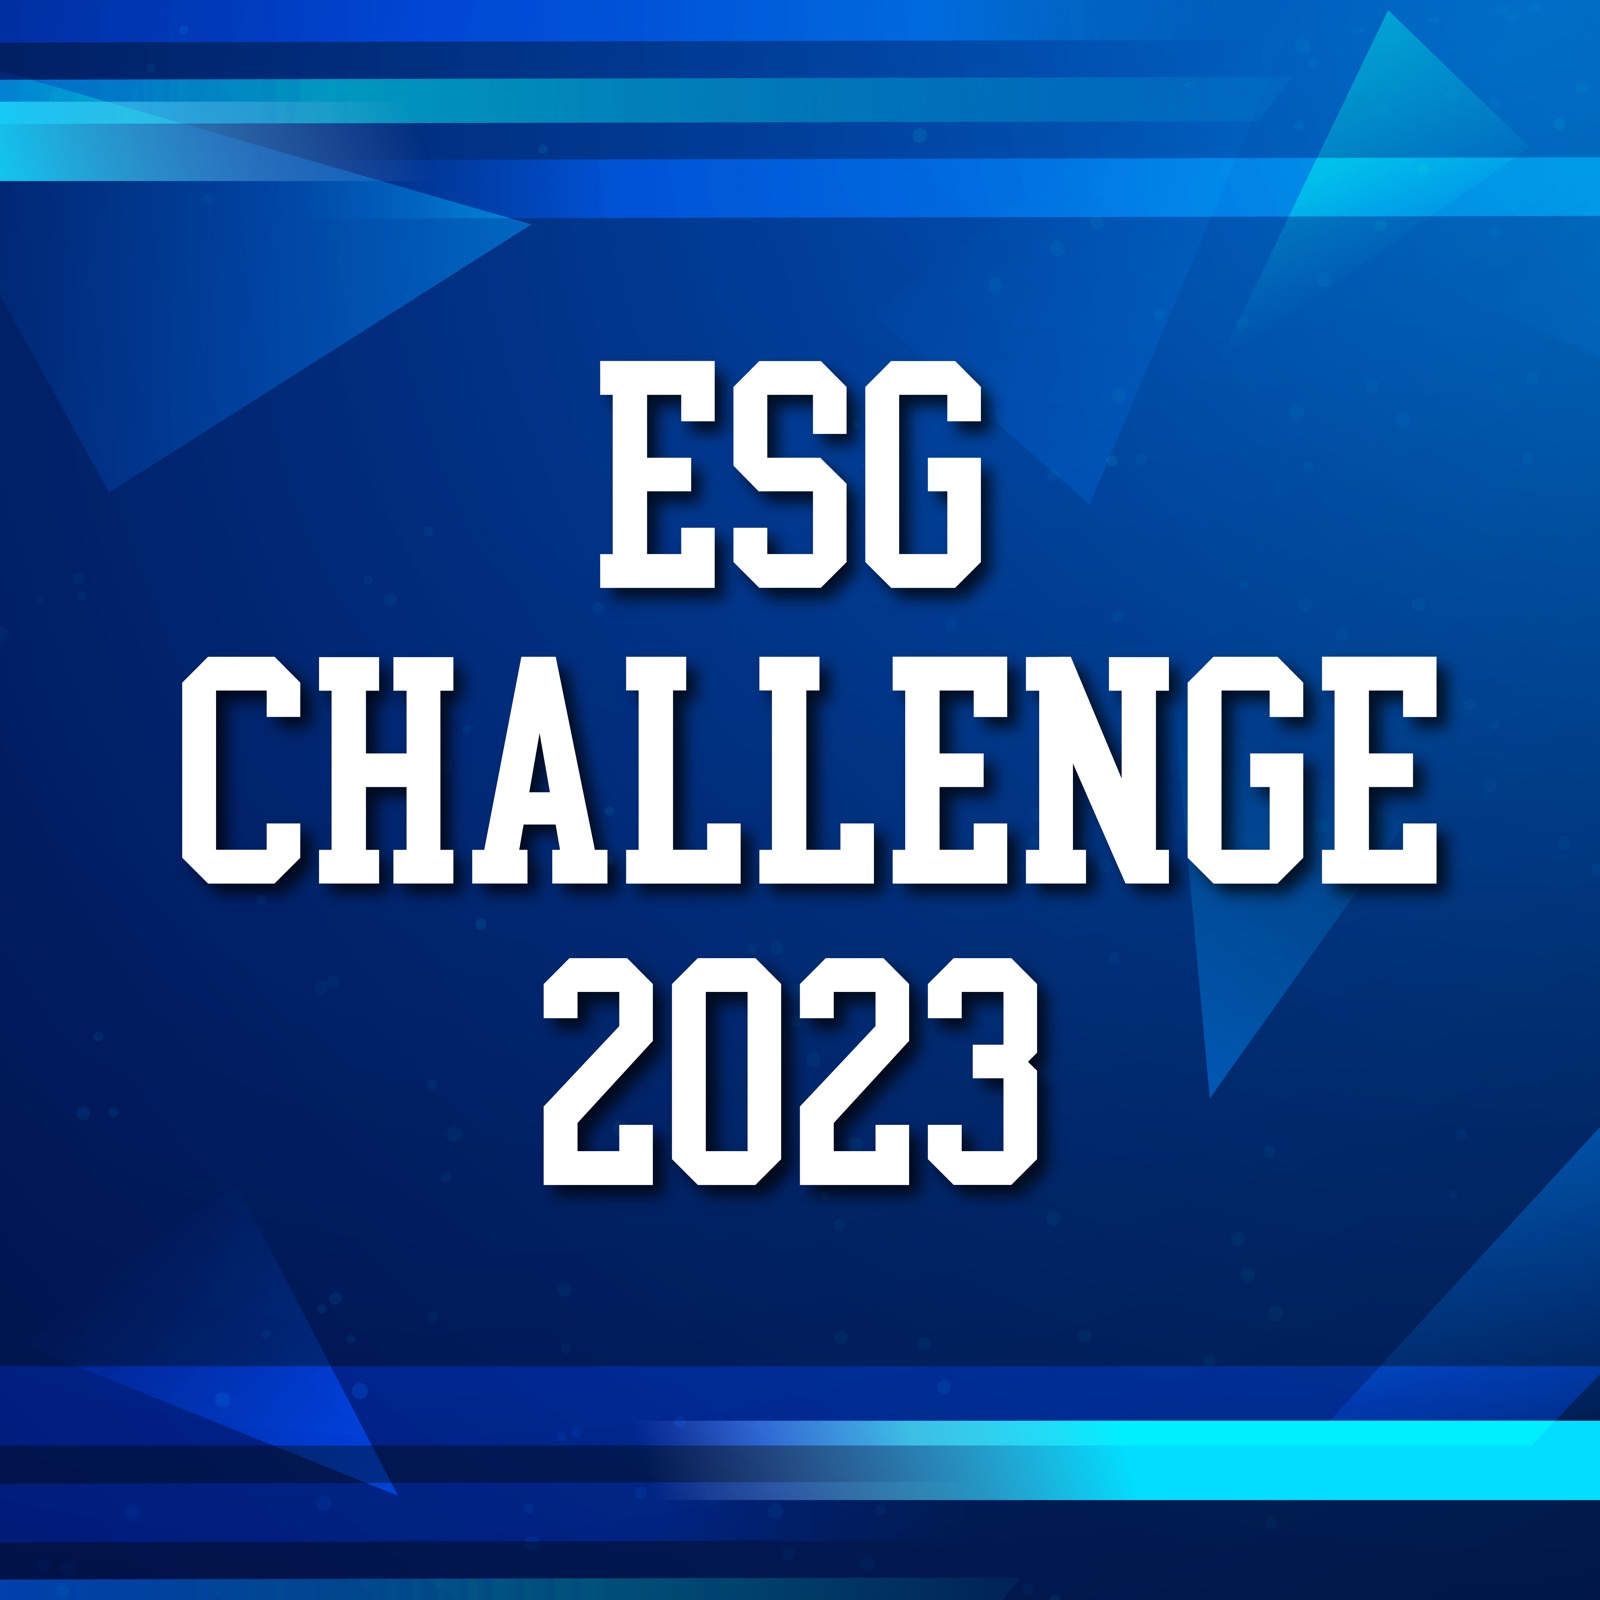 ESG Challenge 2023